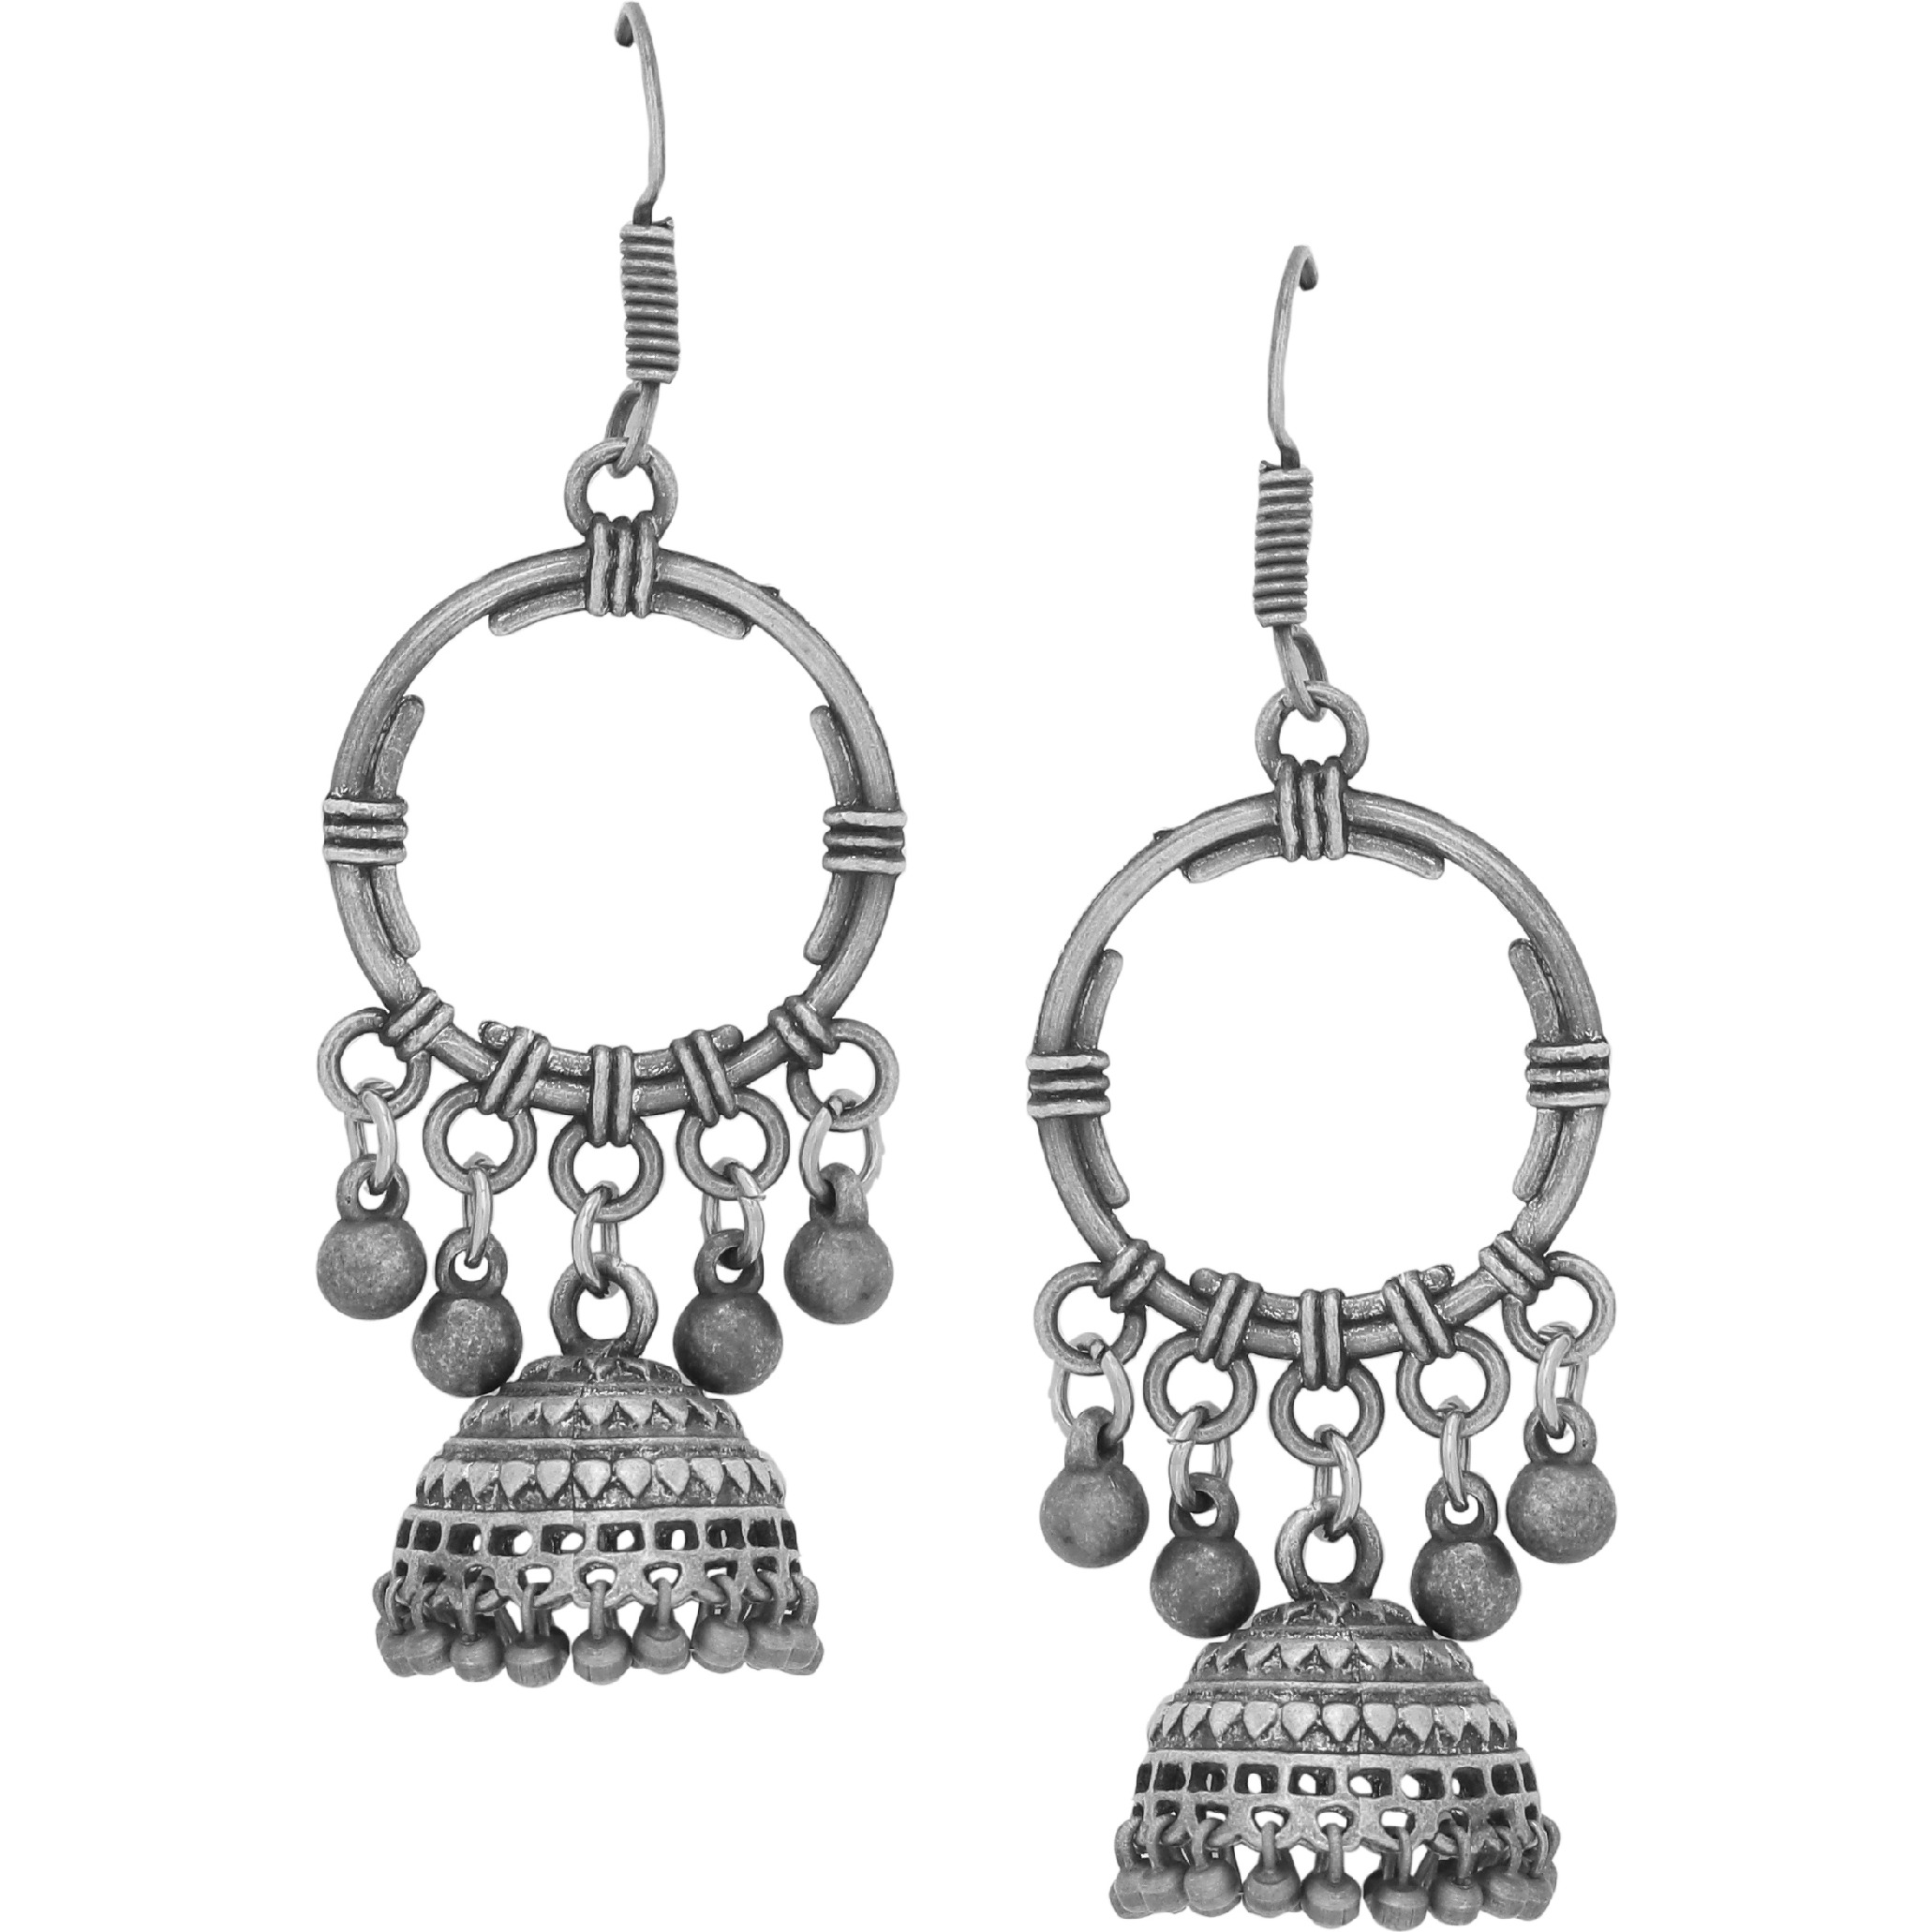 Beautiful Silver Plated Jhumka Earrings By Silvermerc Designs